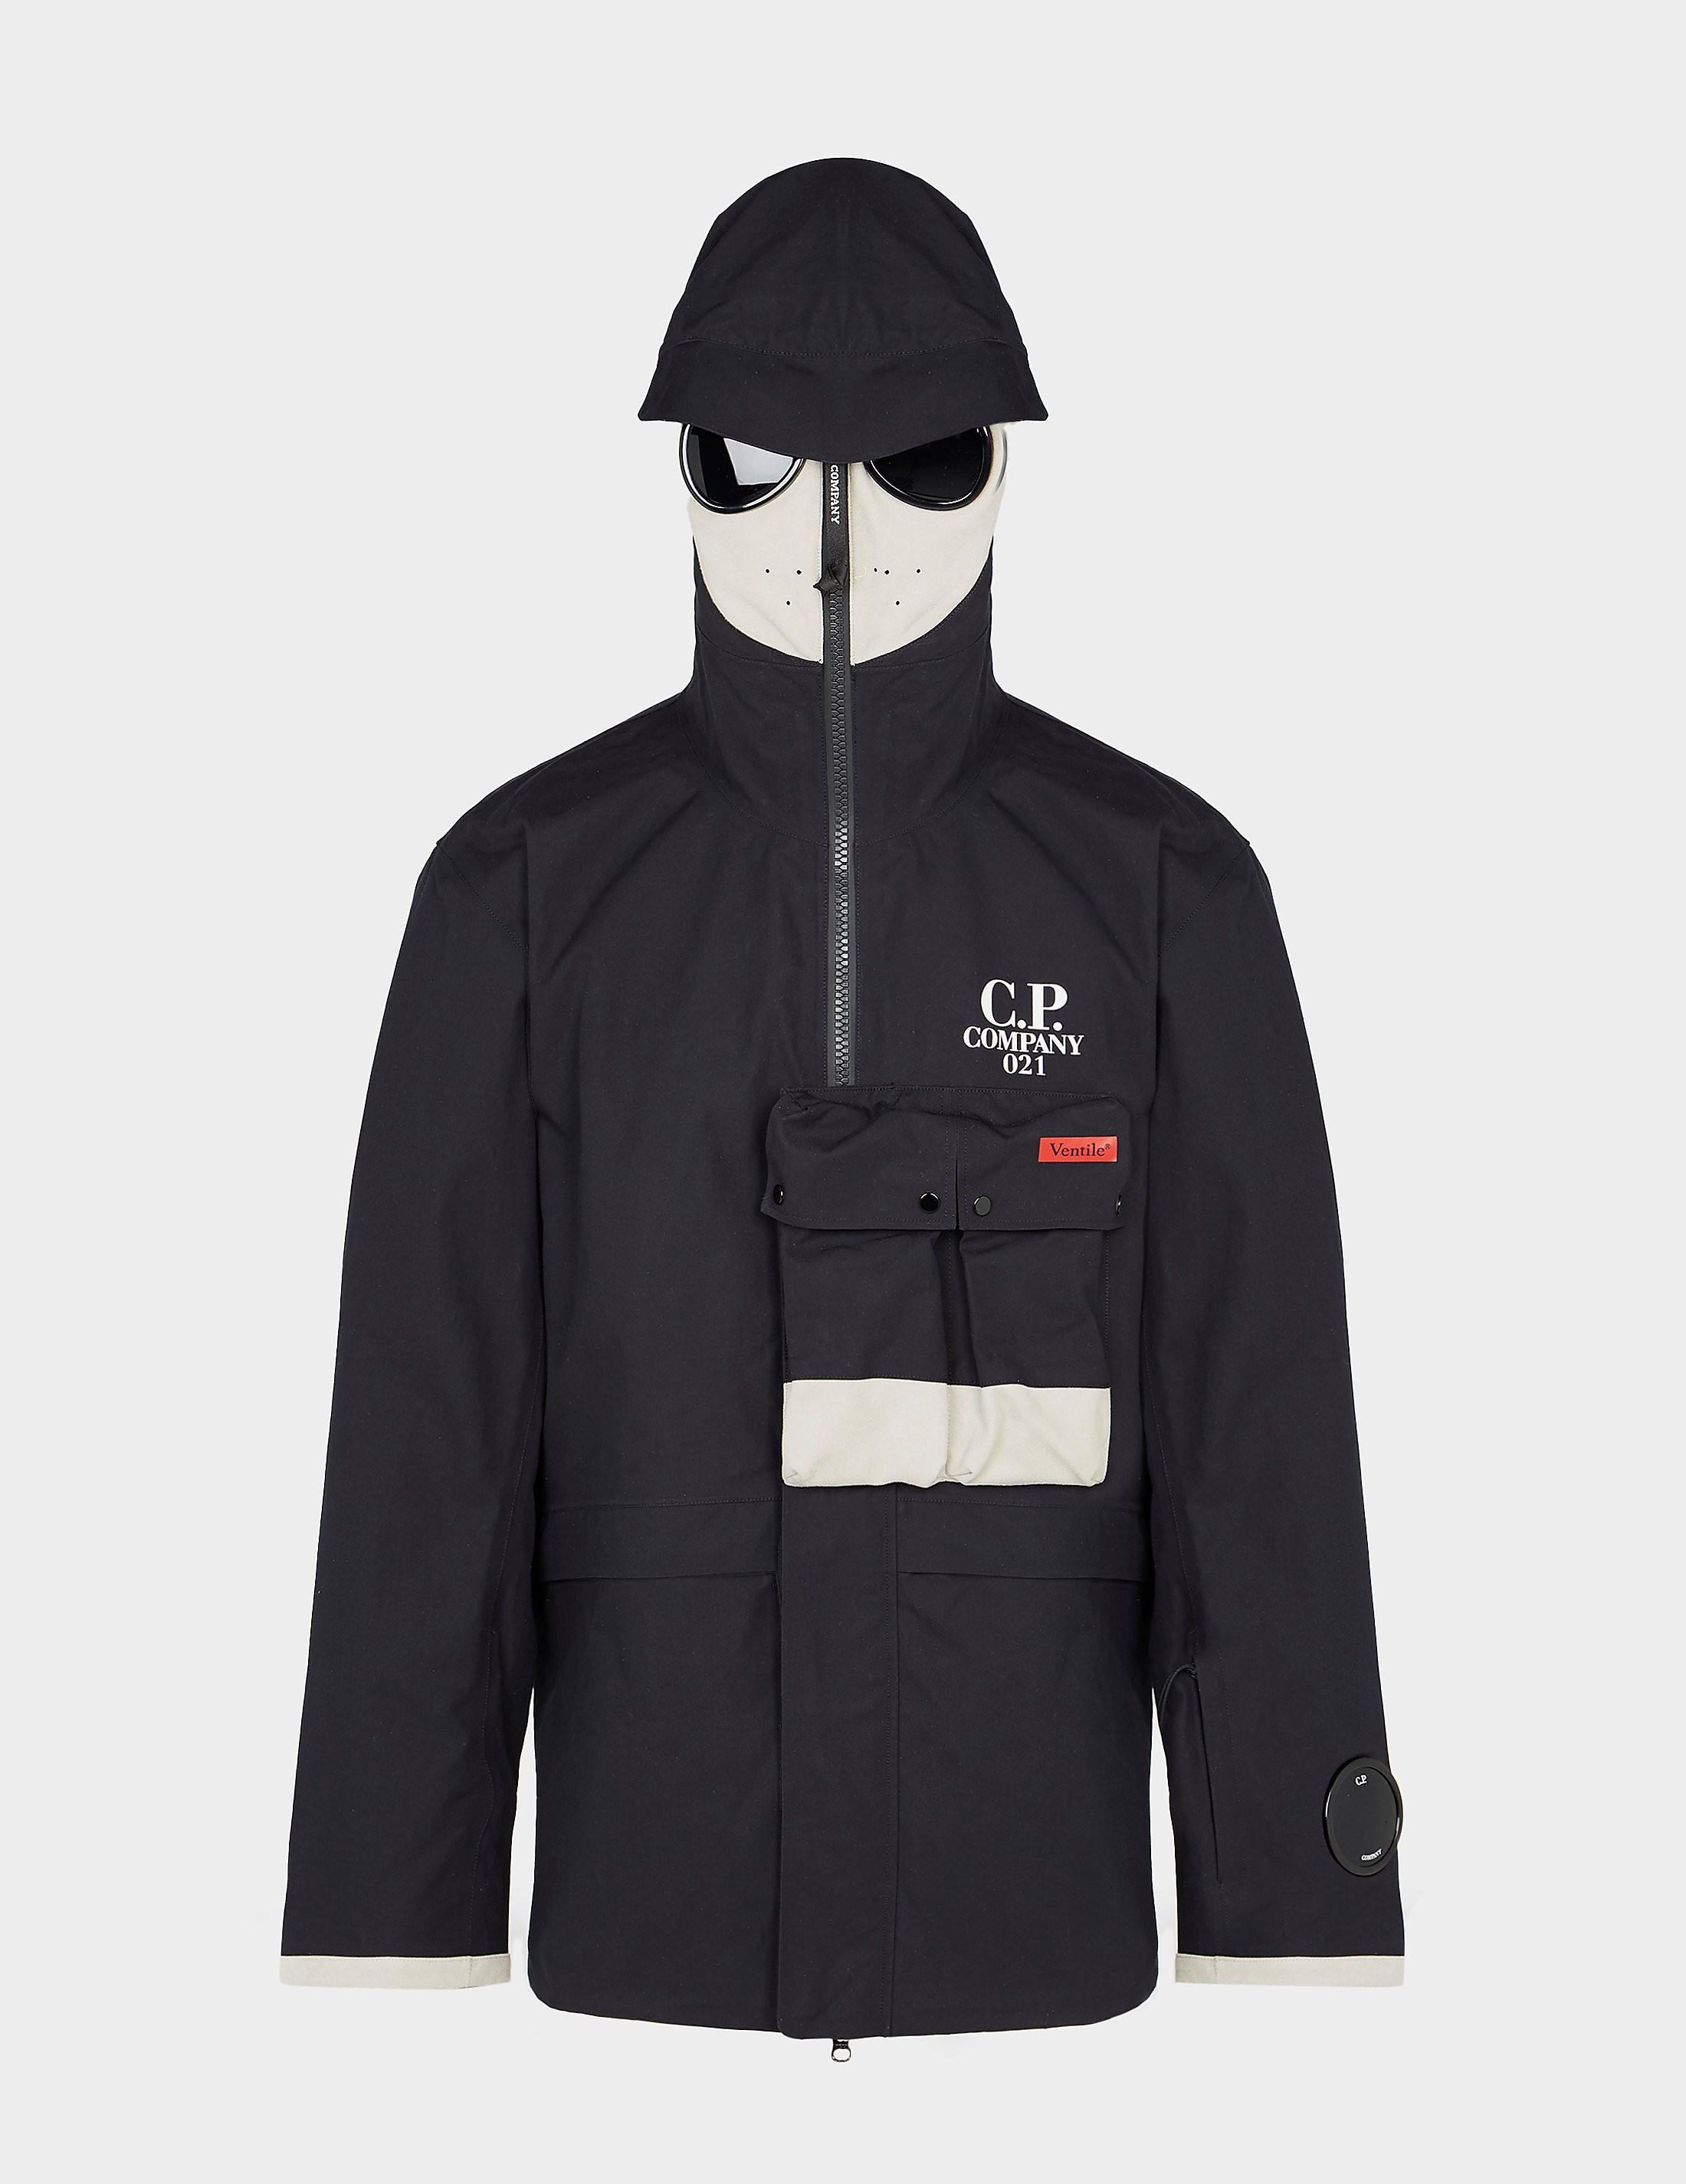 C.P. Company Ventile Explorer Jacket in Black for Men | Lyst